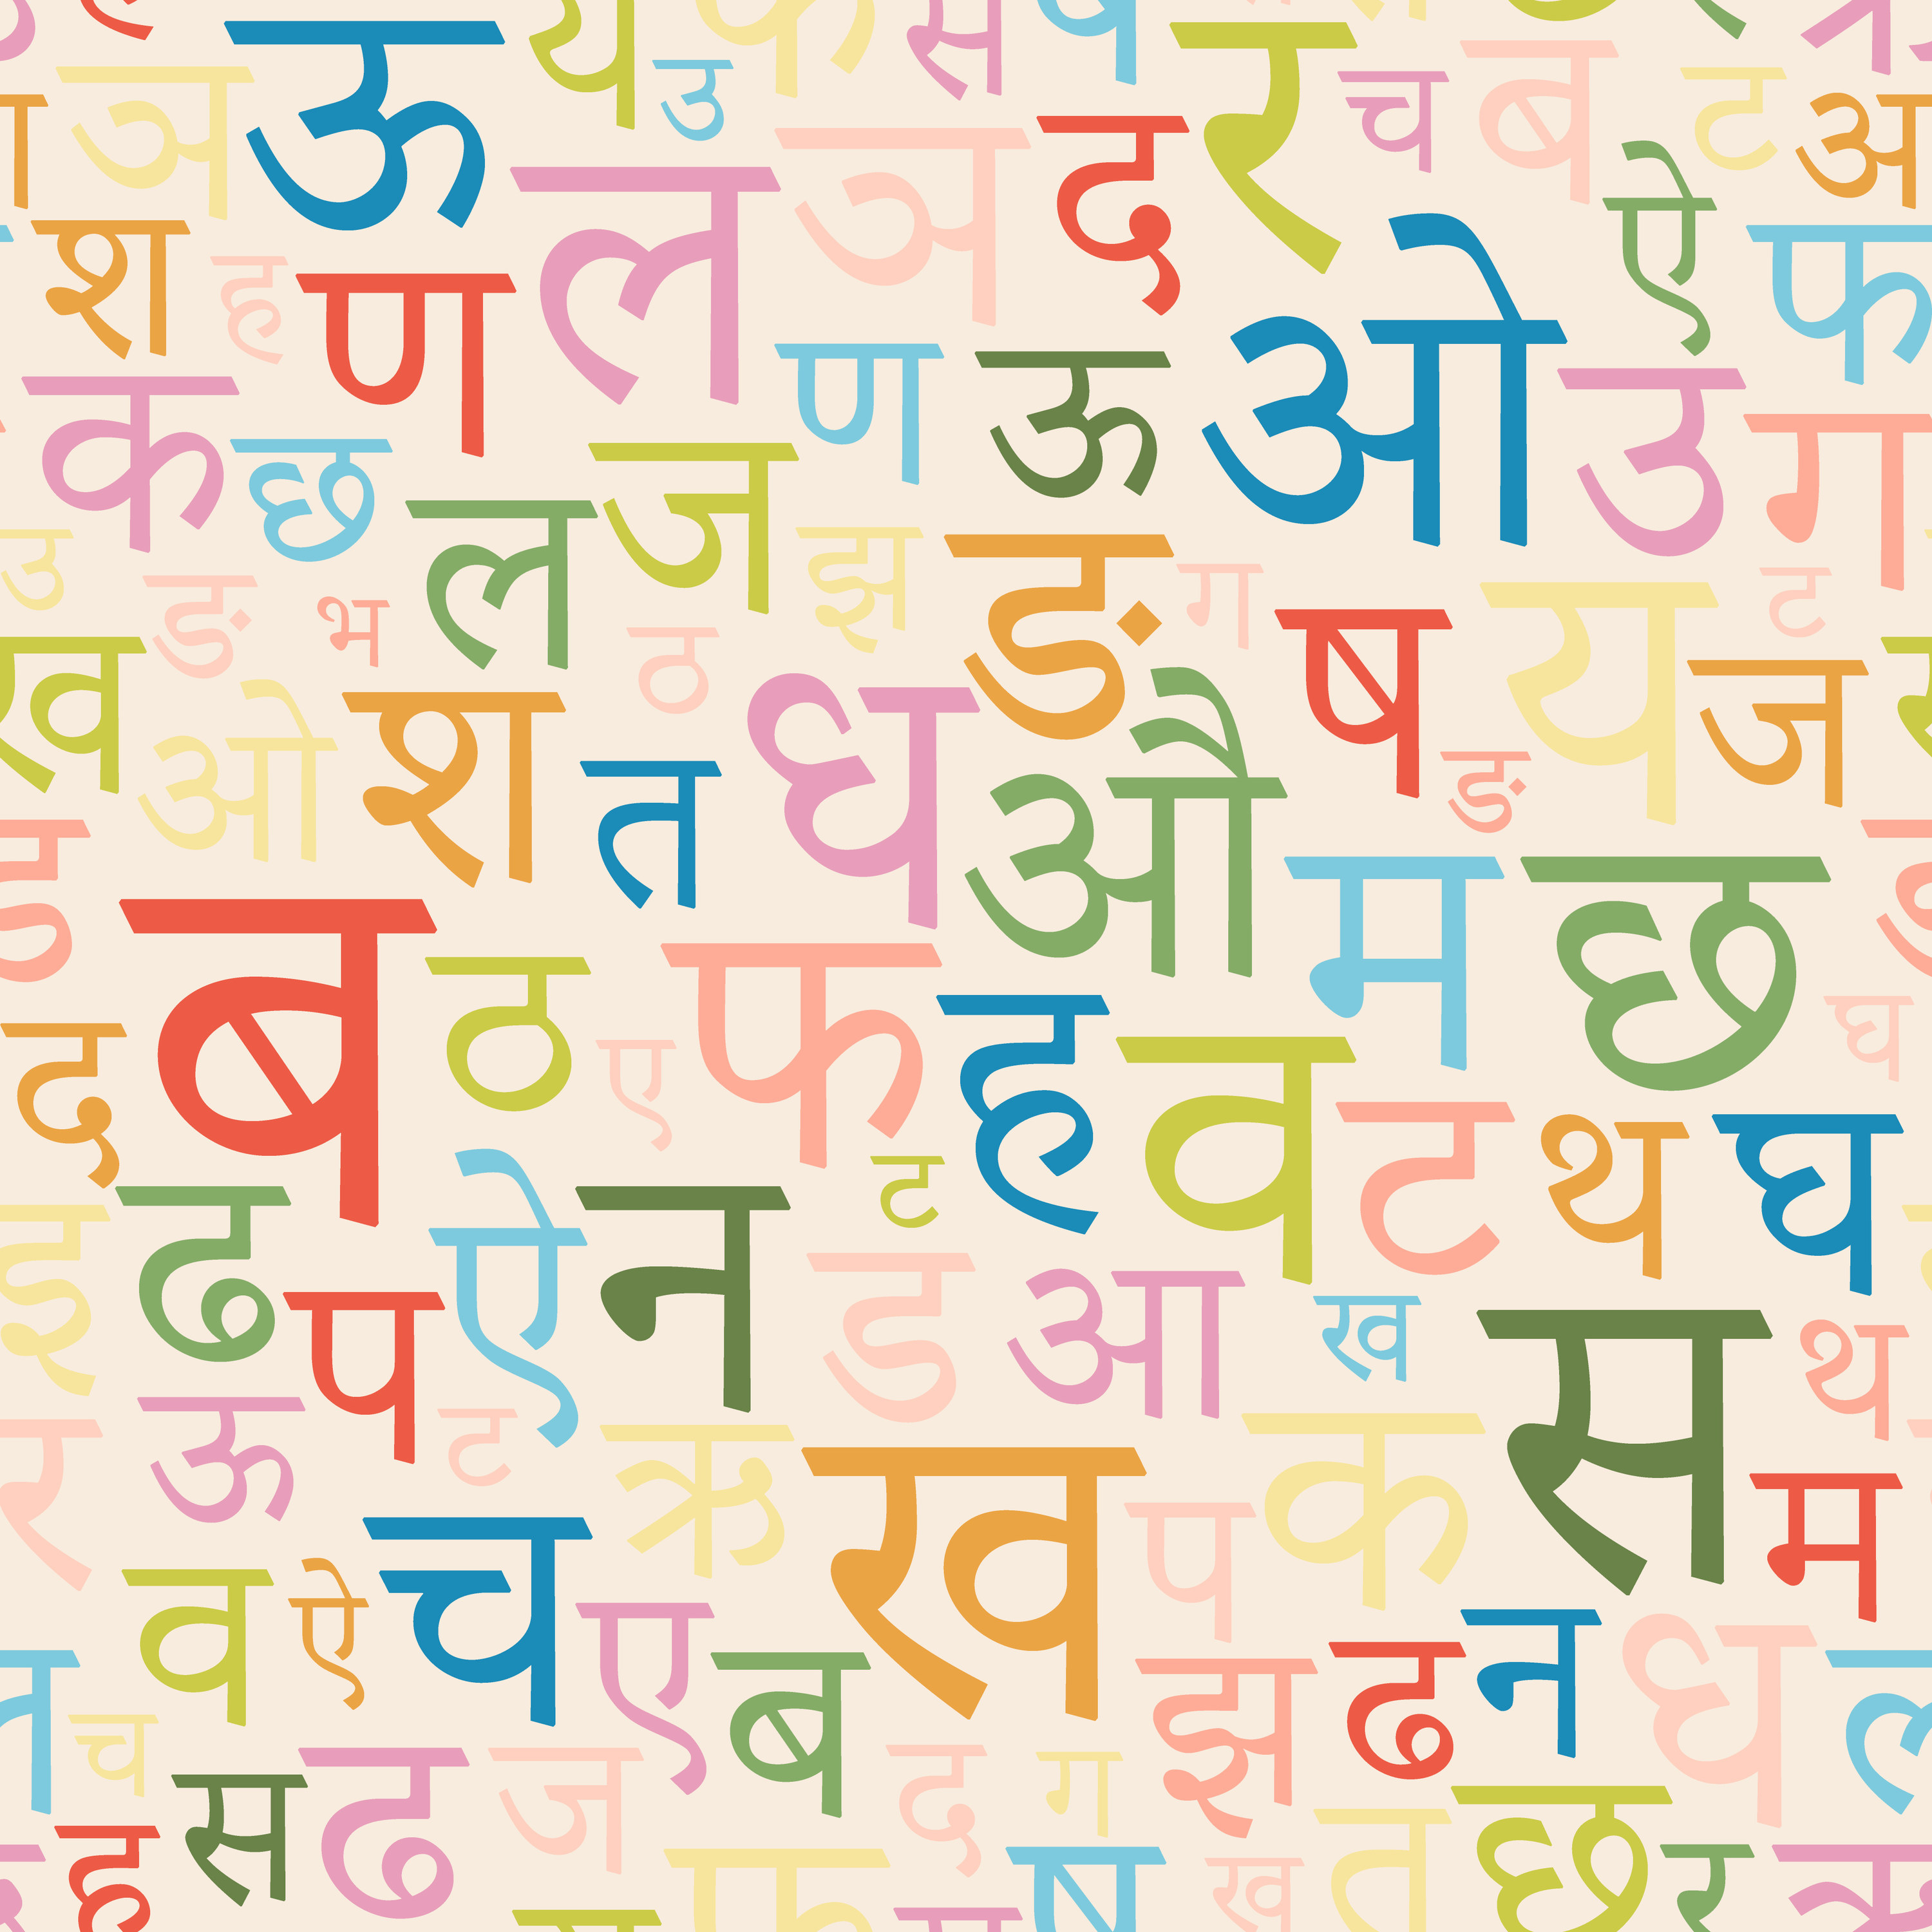 Bhojpuri alphabet